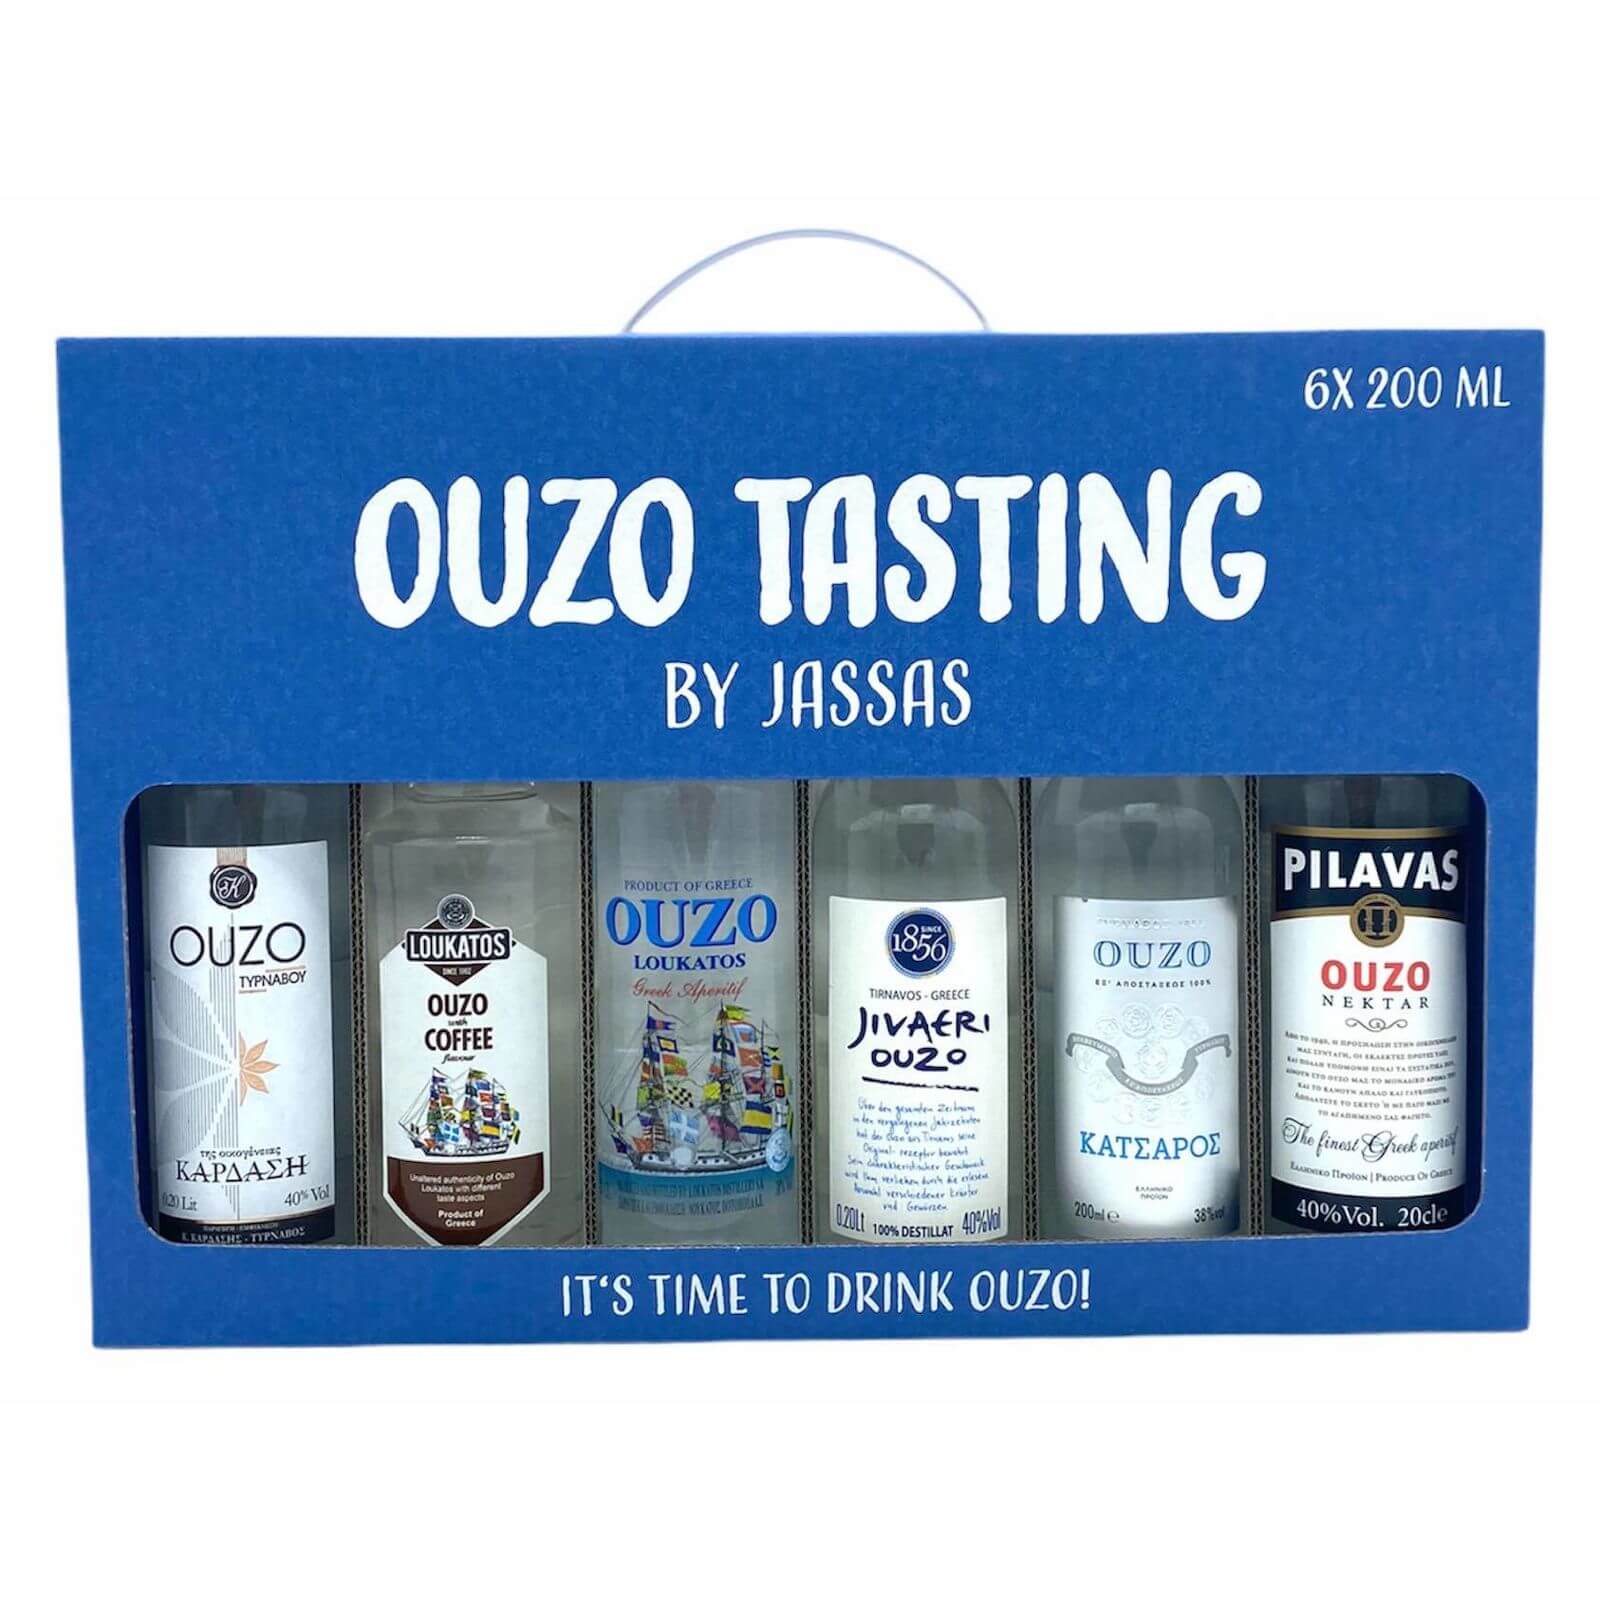 Ouzo Tasting by Jassas 6x 200ml